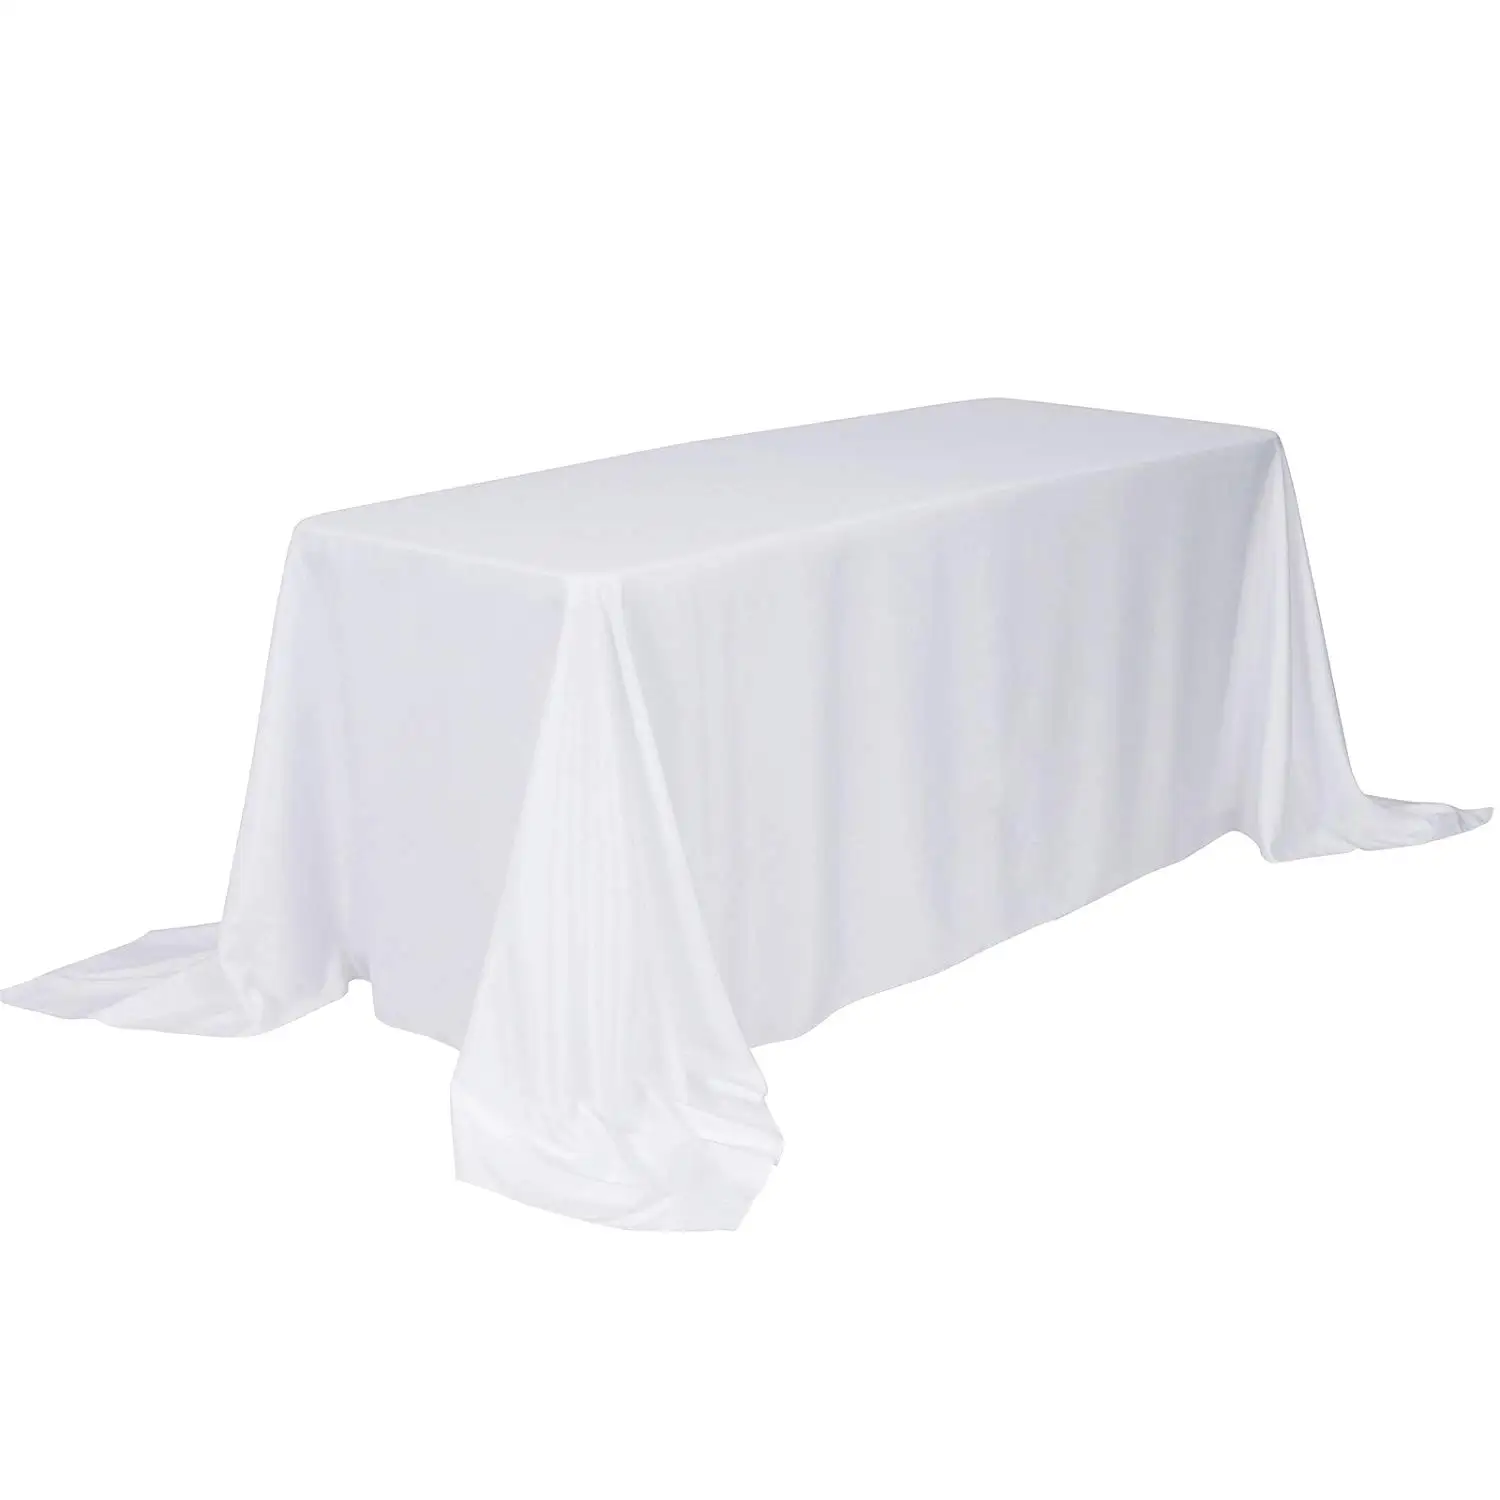 Tablecloth,Black Tablecloths,White Tablecloths,Party Tablecloth,Customized Tablecloths,wedding tablecloth 60x90 Rectangular Table Cloth